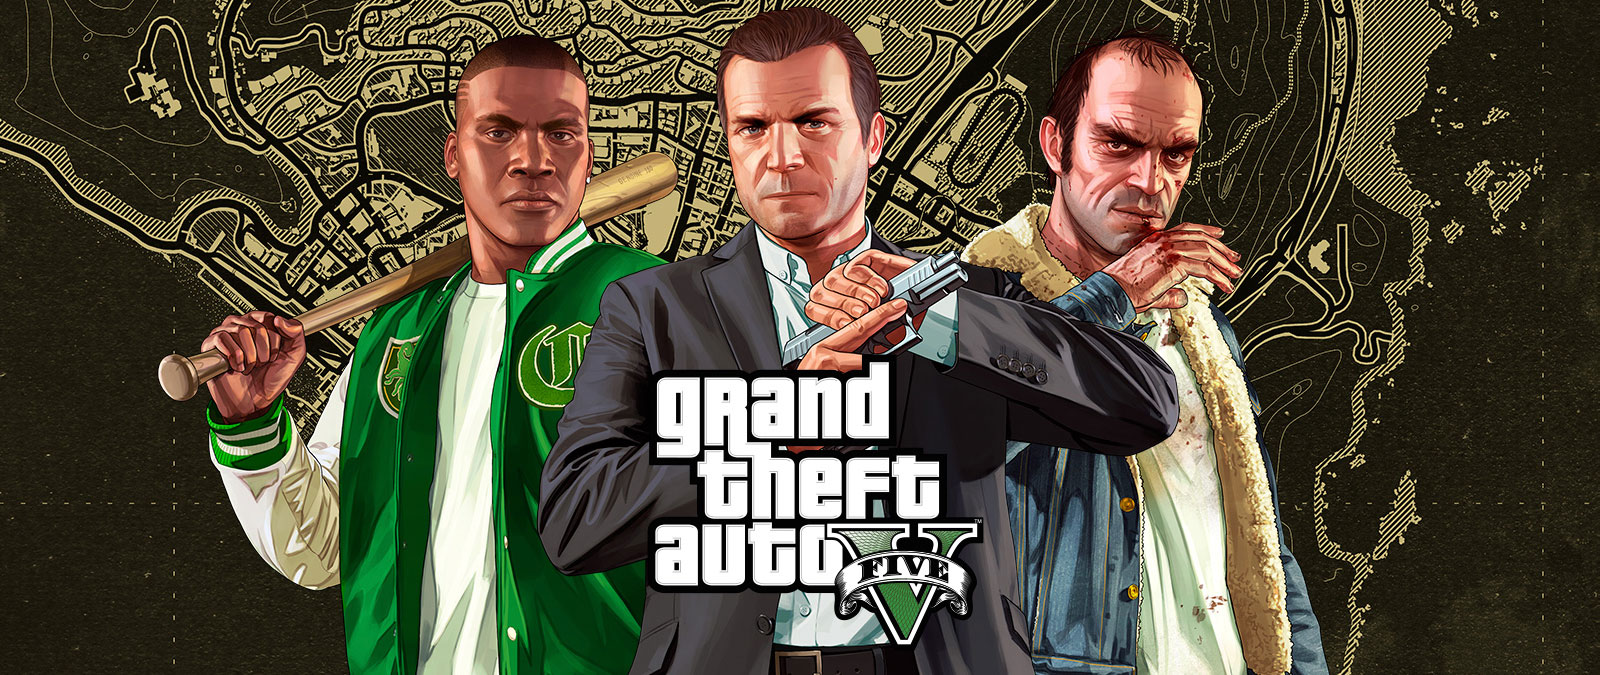 Grand Theft Auto V. Franklin Clinton, Michael de Santa ve Trevor Phillips, Los Santos haritasının önünde duruyor